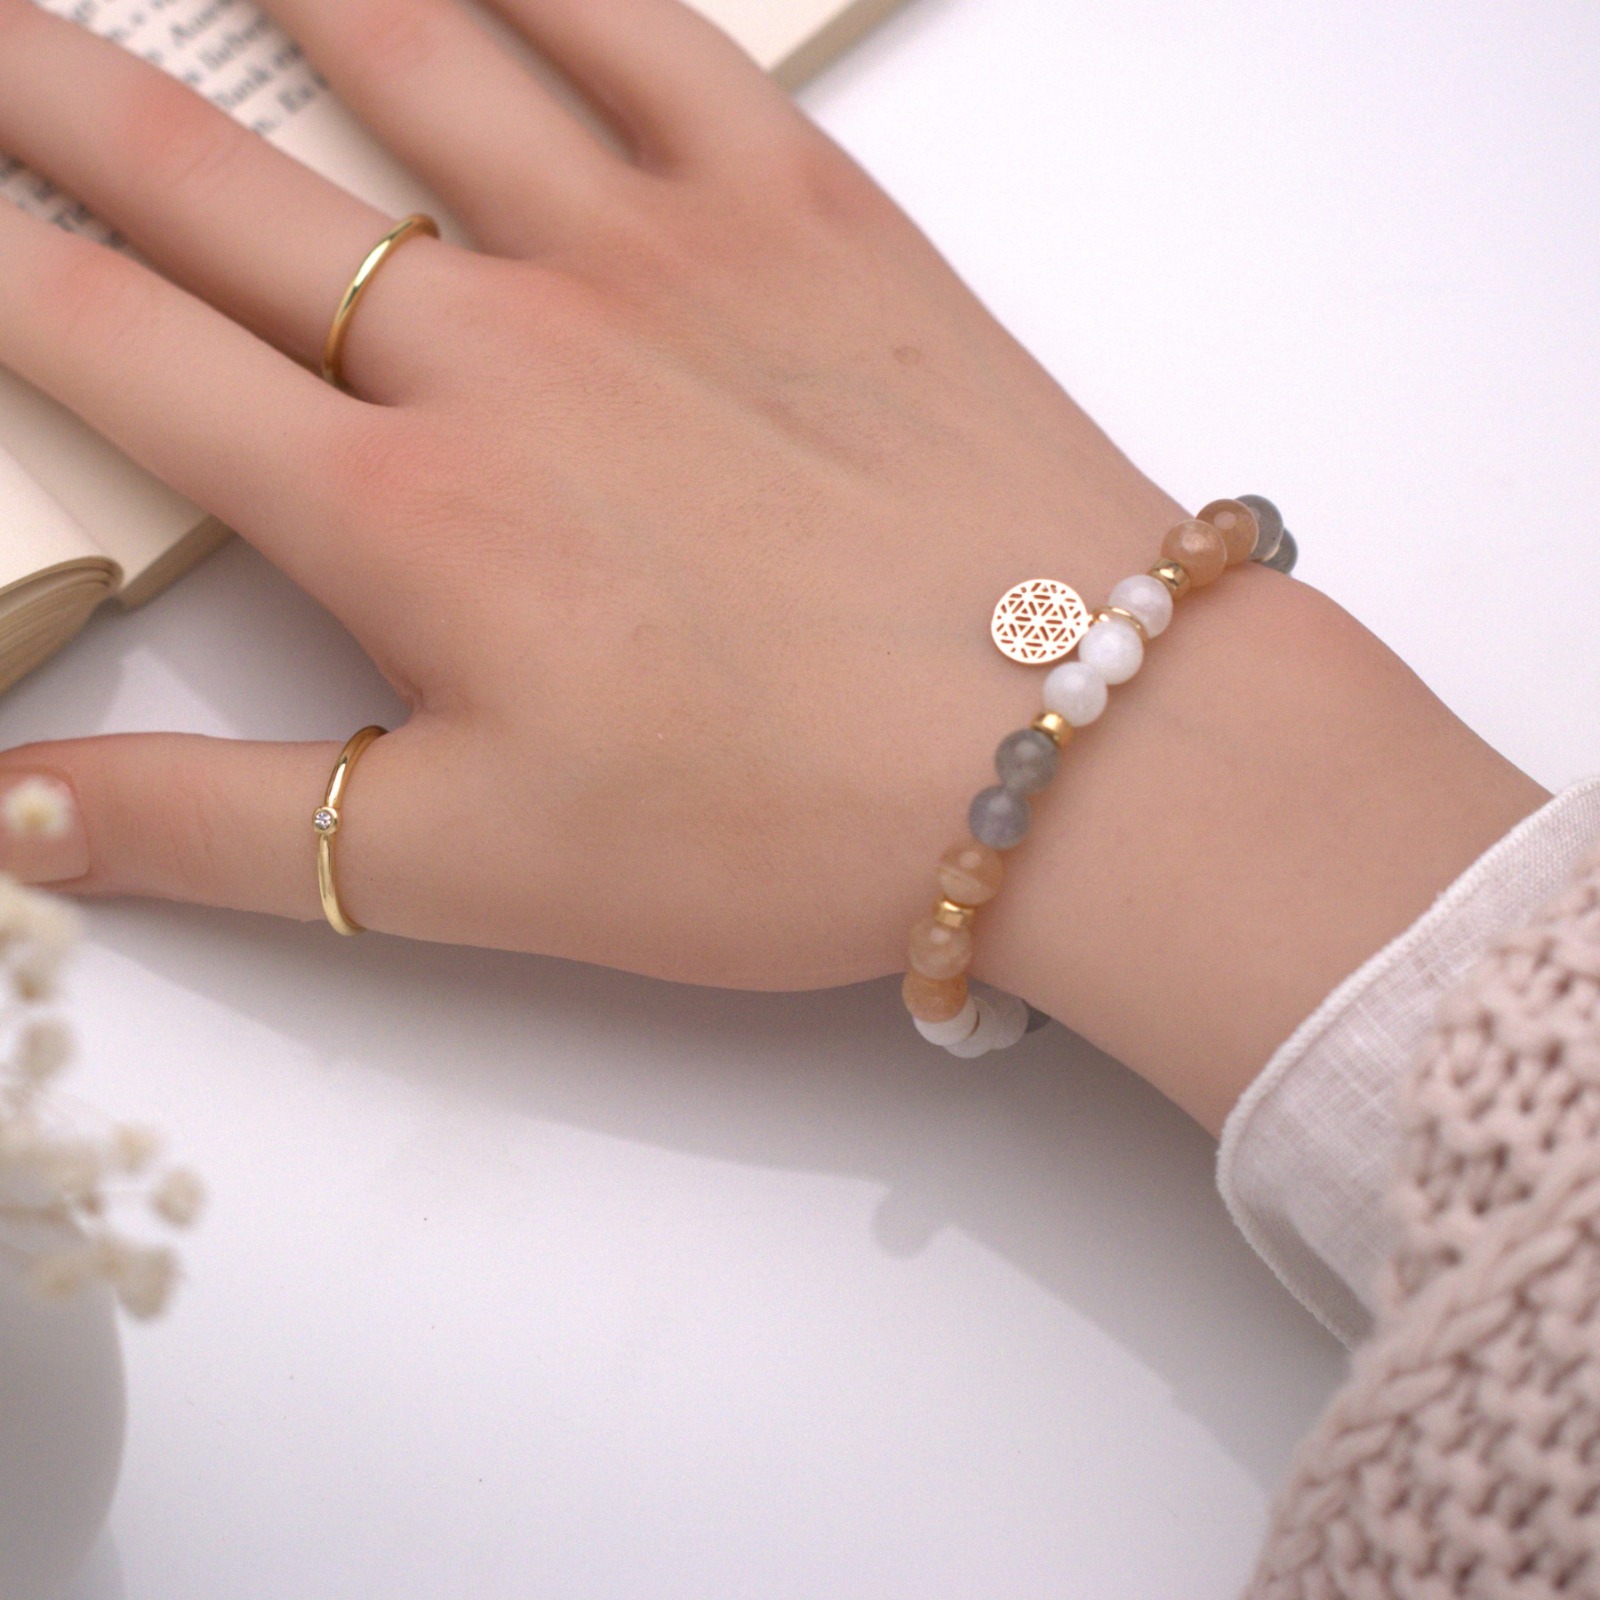 Lebensblume Armband aus Mondstein, 925 Silber, Gold oder Rosègold plattiert, perfektes Geschenk